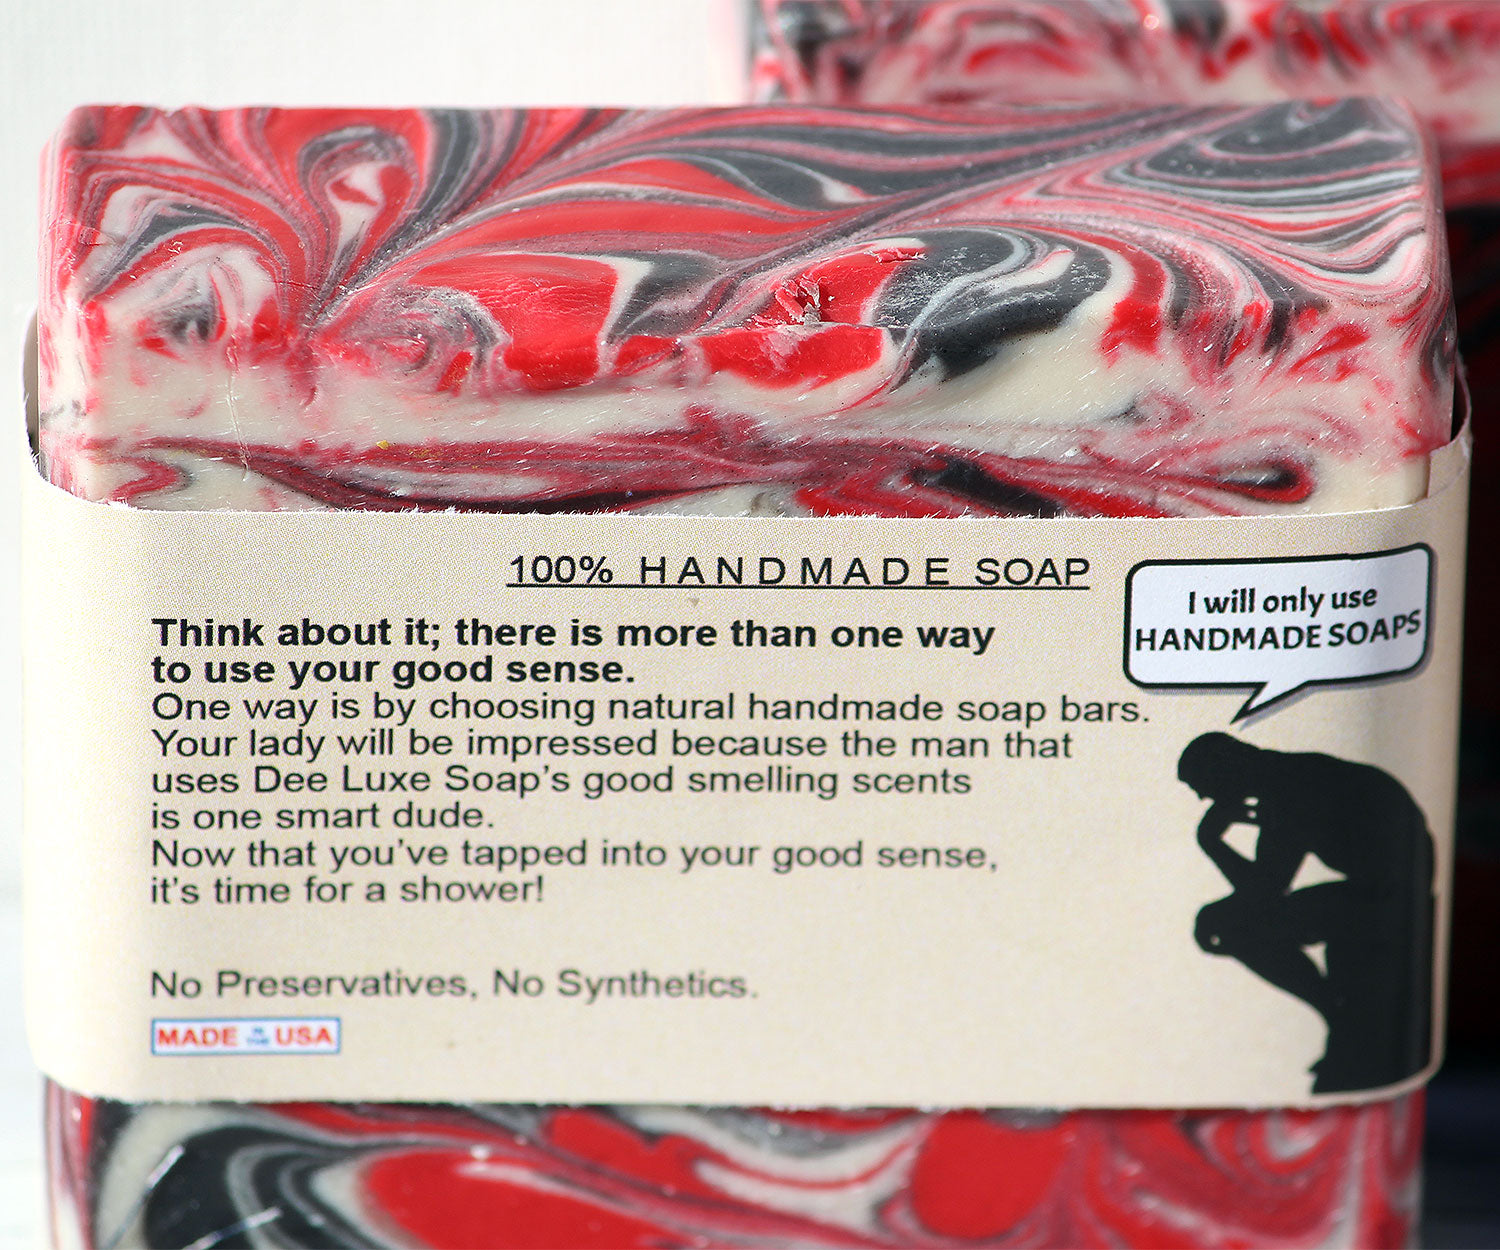 Dude - Natural Handmade Soap